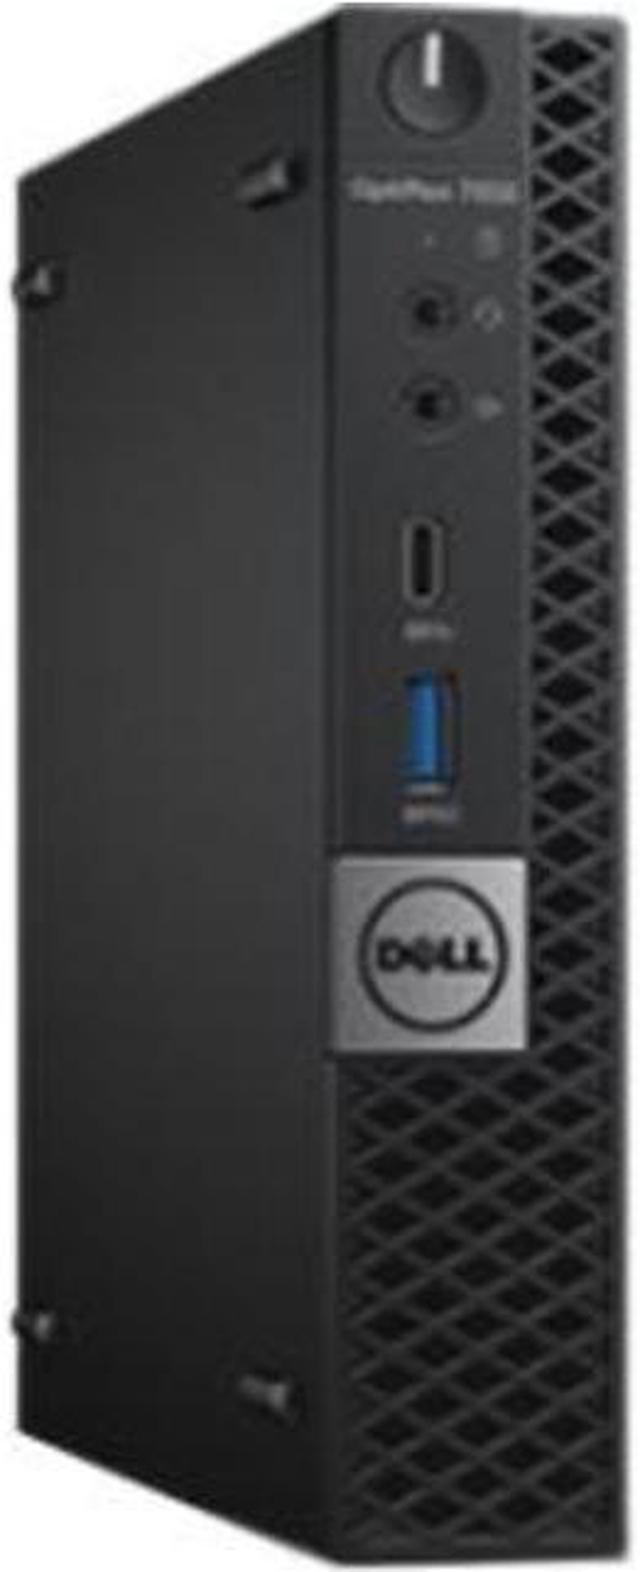  Dell Optiplex 7010 SFF Desktop PC - Intel Core i5-3470 3.2GHz  4GB 250GB DVD Windows 10 Pro (Renewed) : Electronics